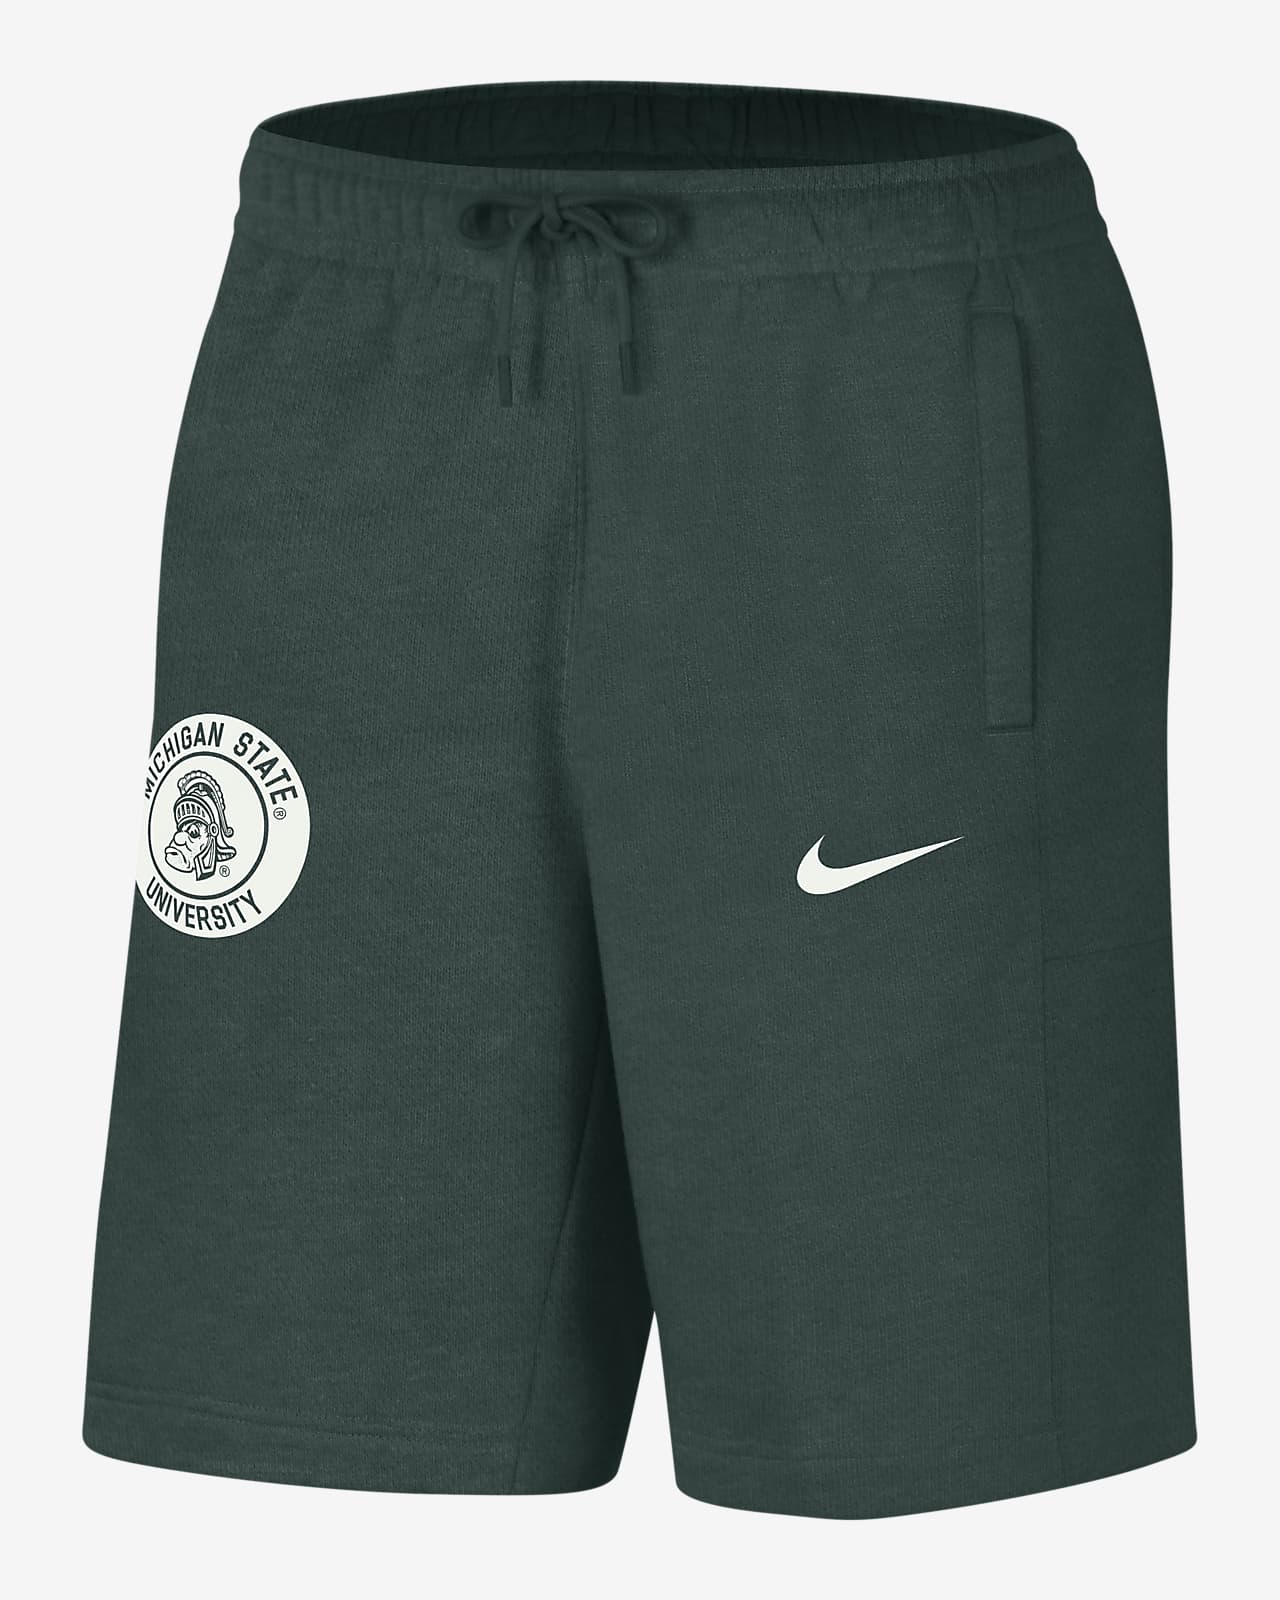 Shorts Nike College para hombre Michigan State